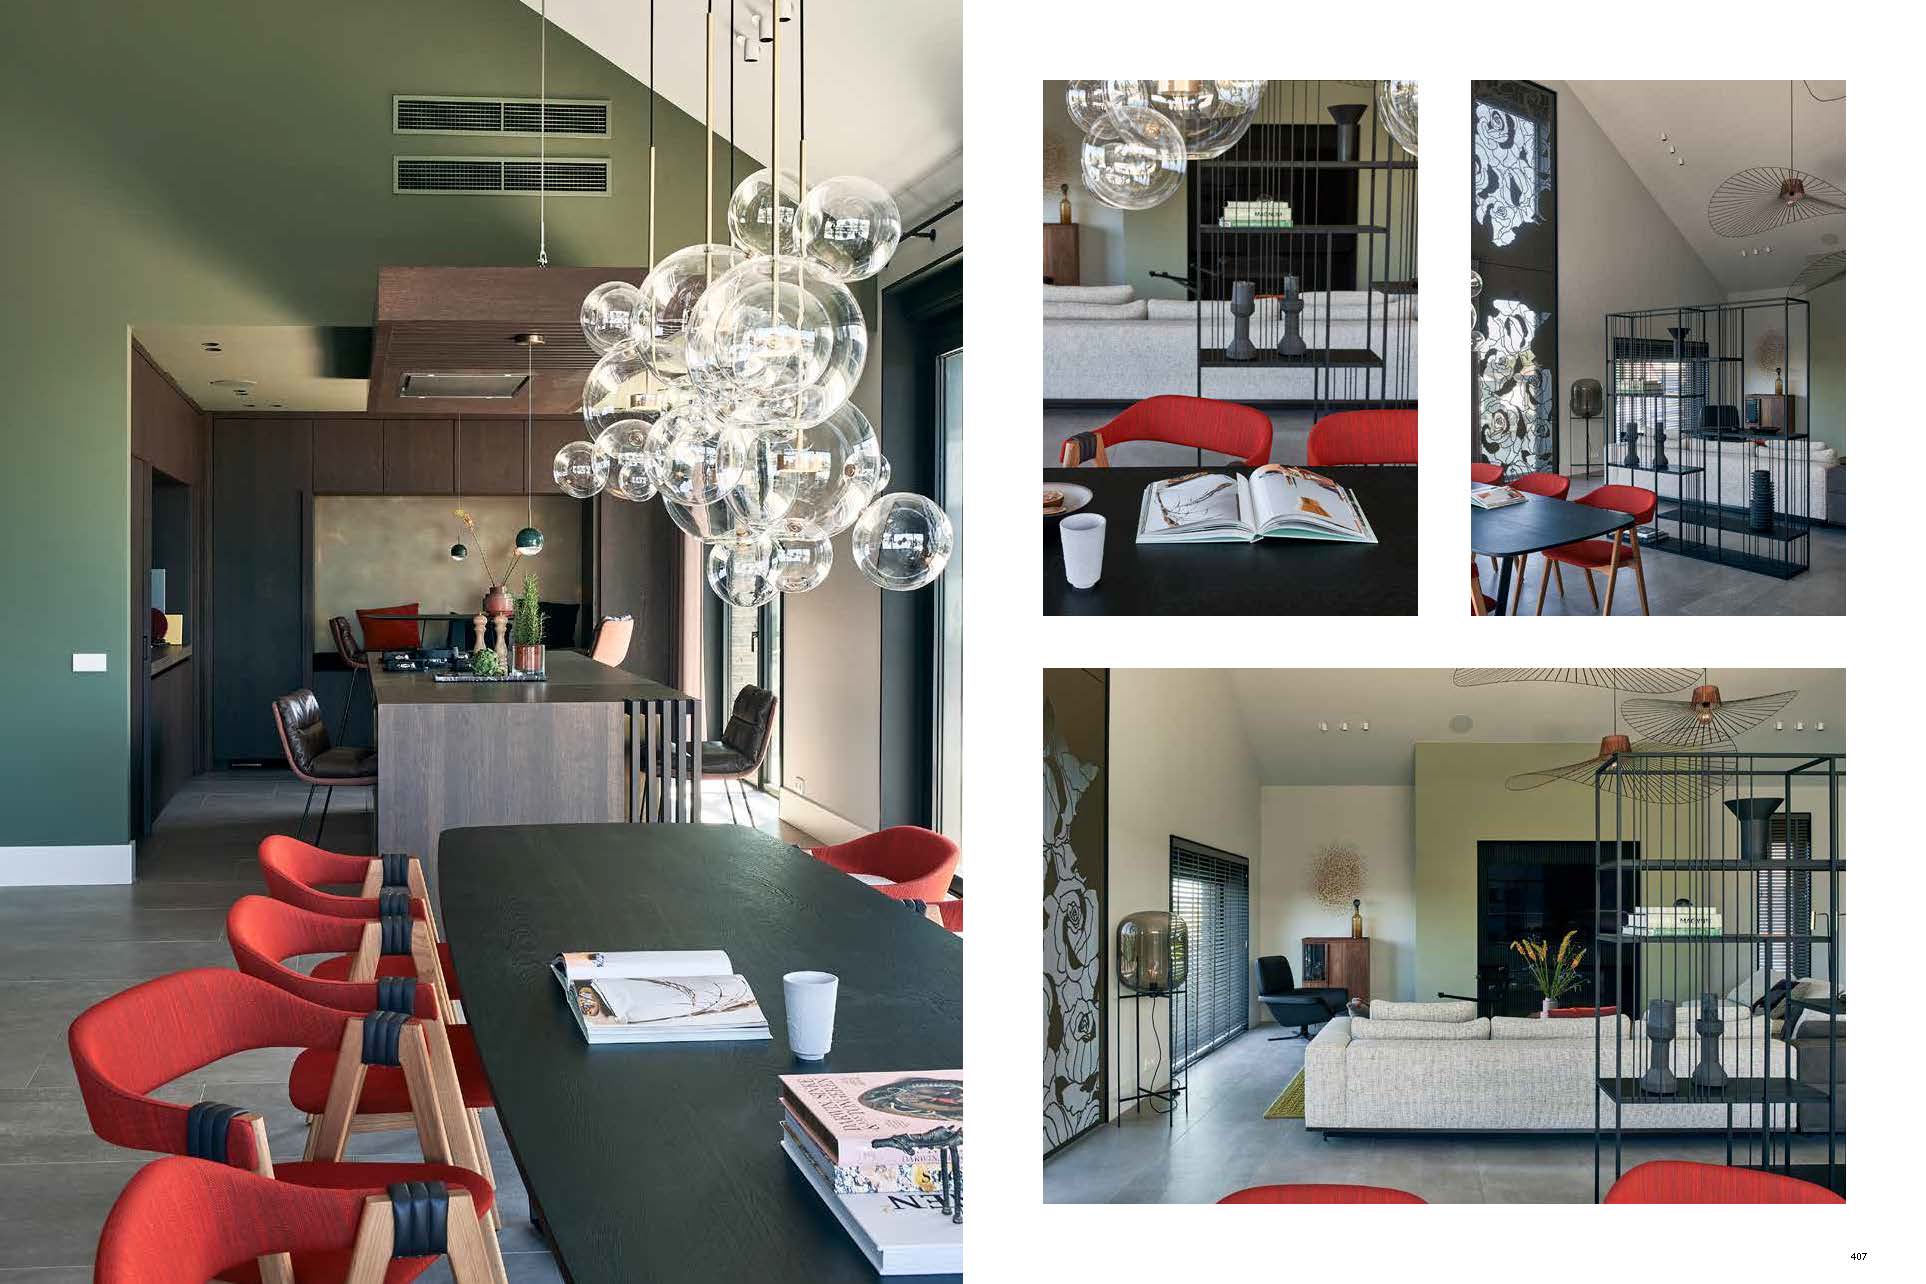 ENZO architectuur N interieur - Haarlemmermeer - Silo - Burgerveen - publicatie - HOOG.DESIGN - The Best Dutch Interior Design